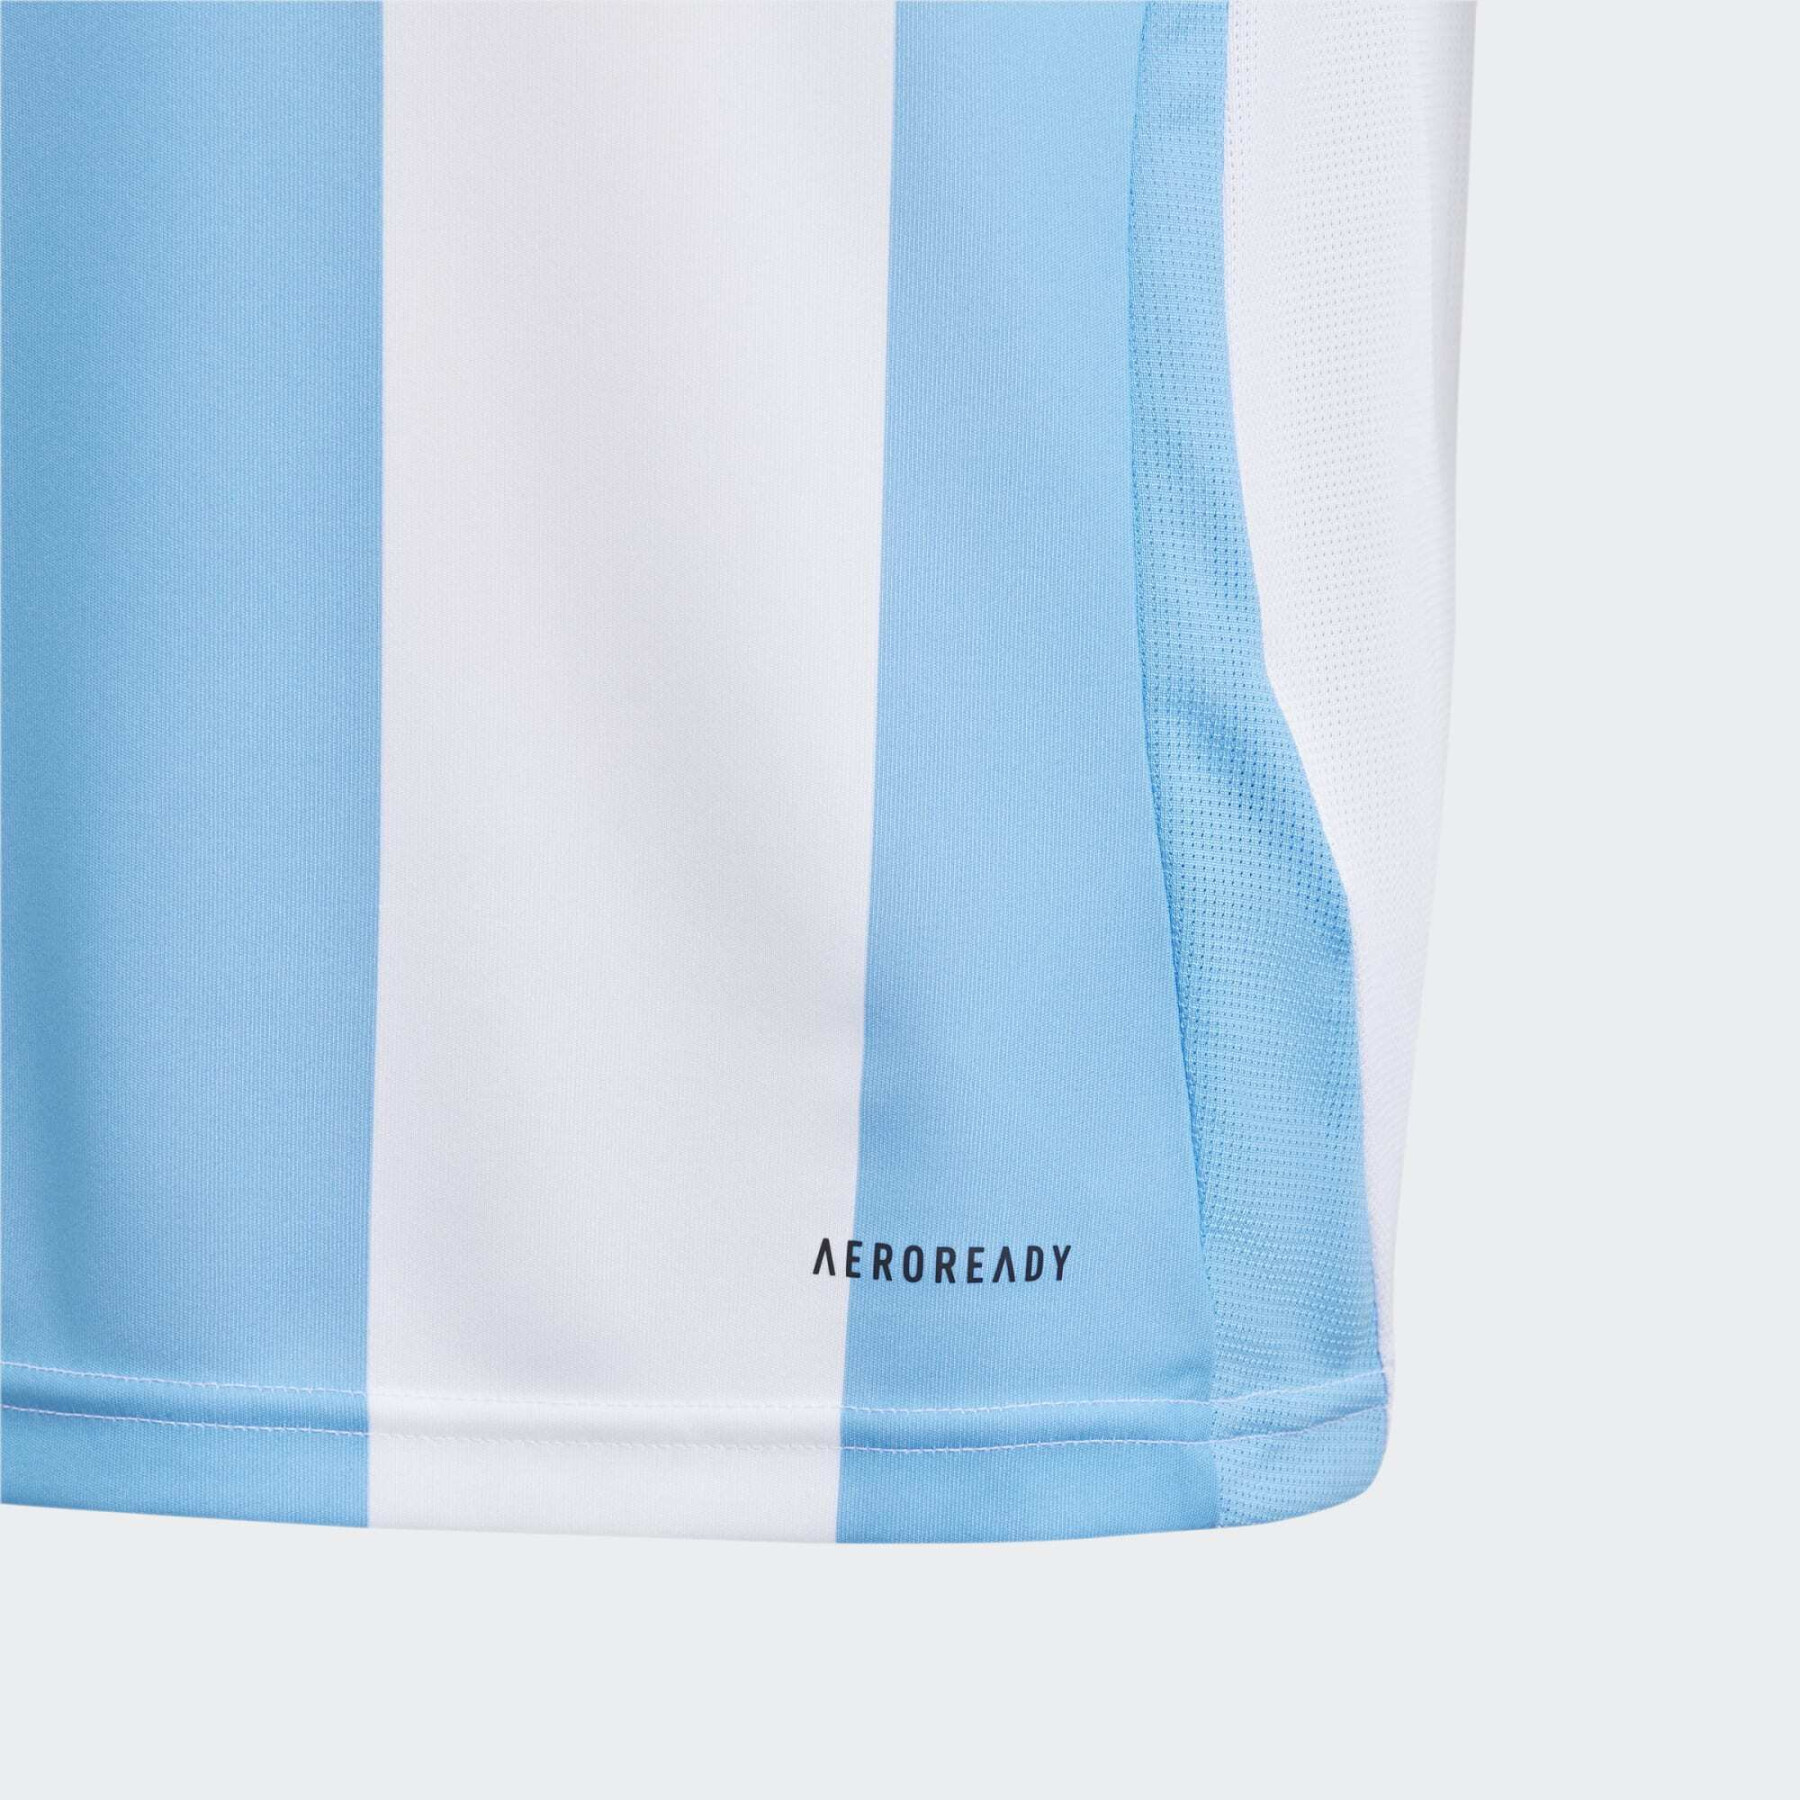 Camiseta primera equipación infantil Argentina Copa América 2024